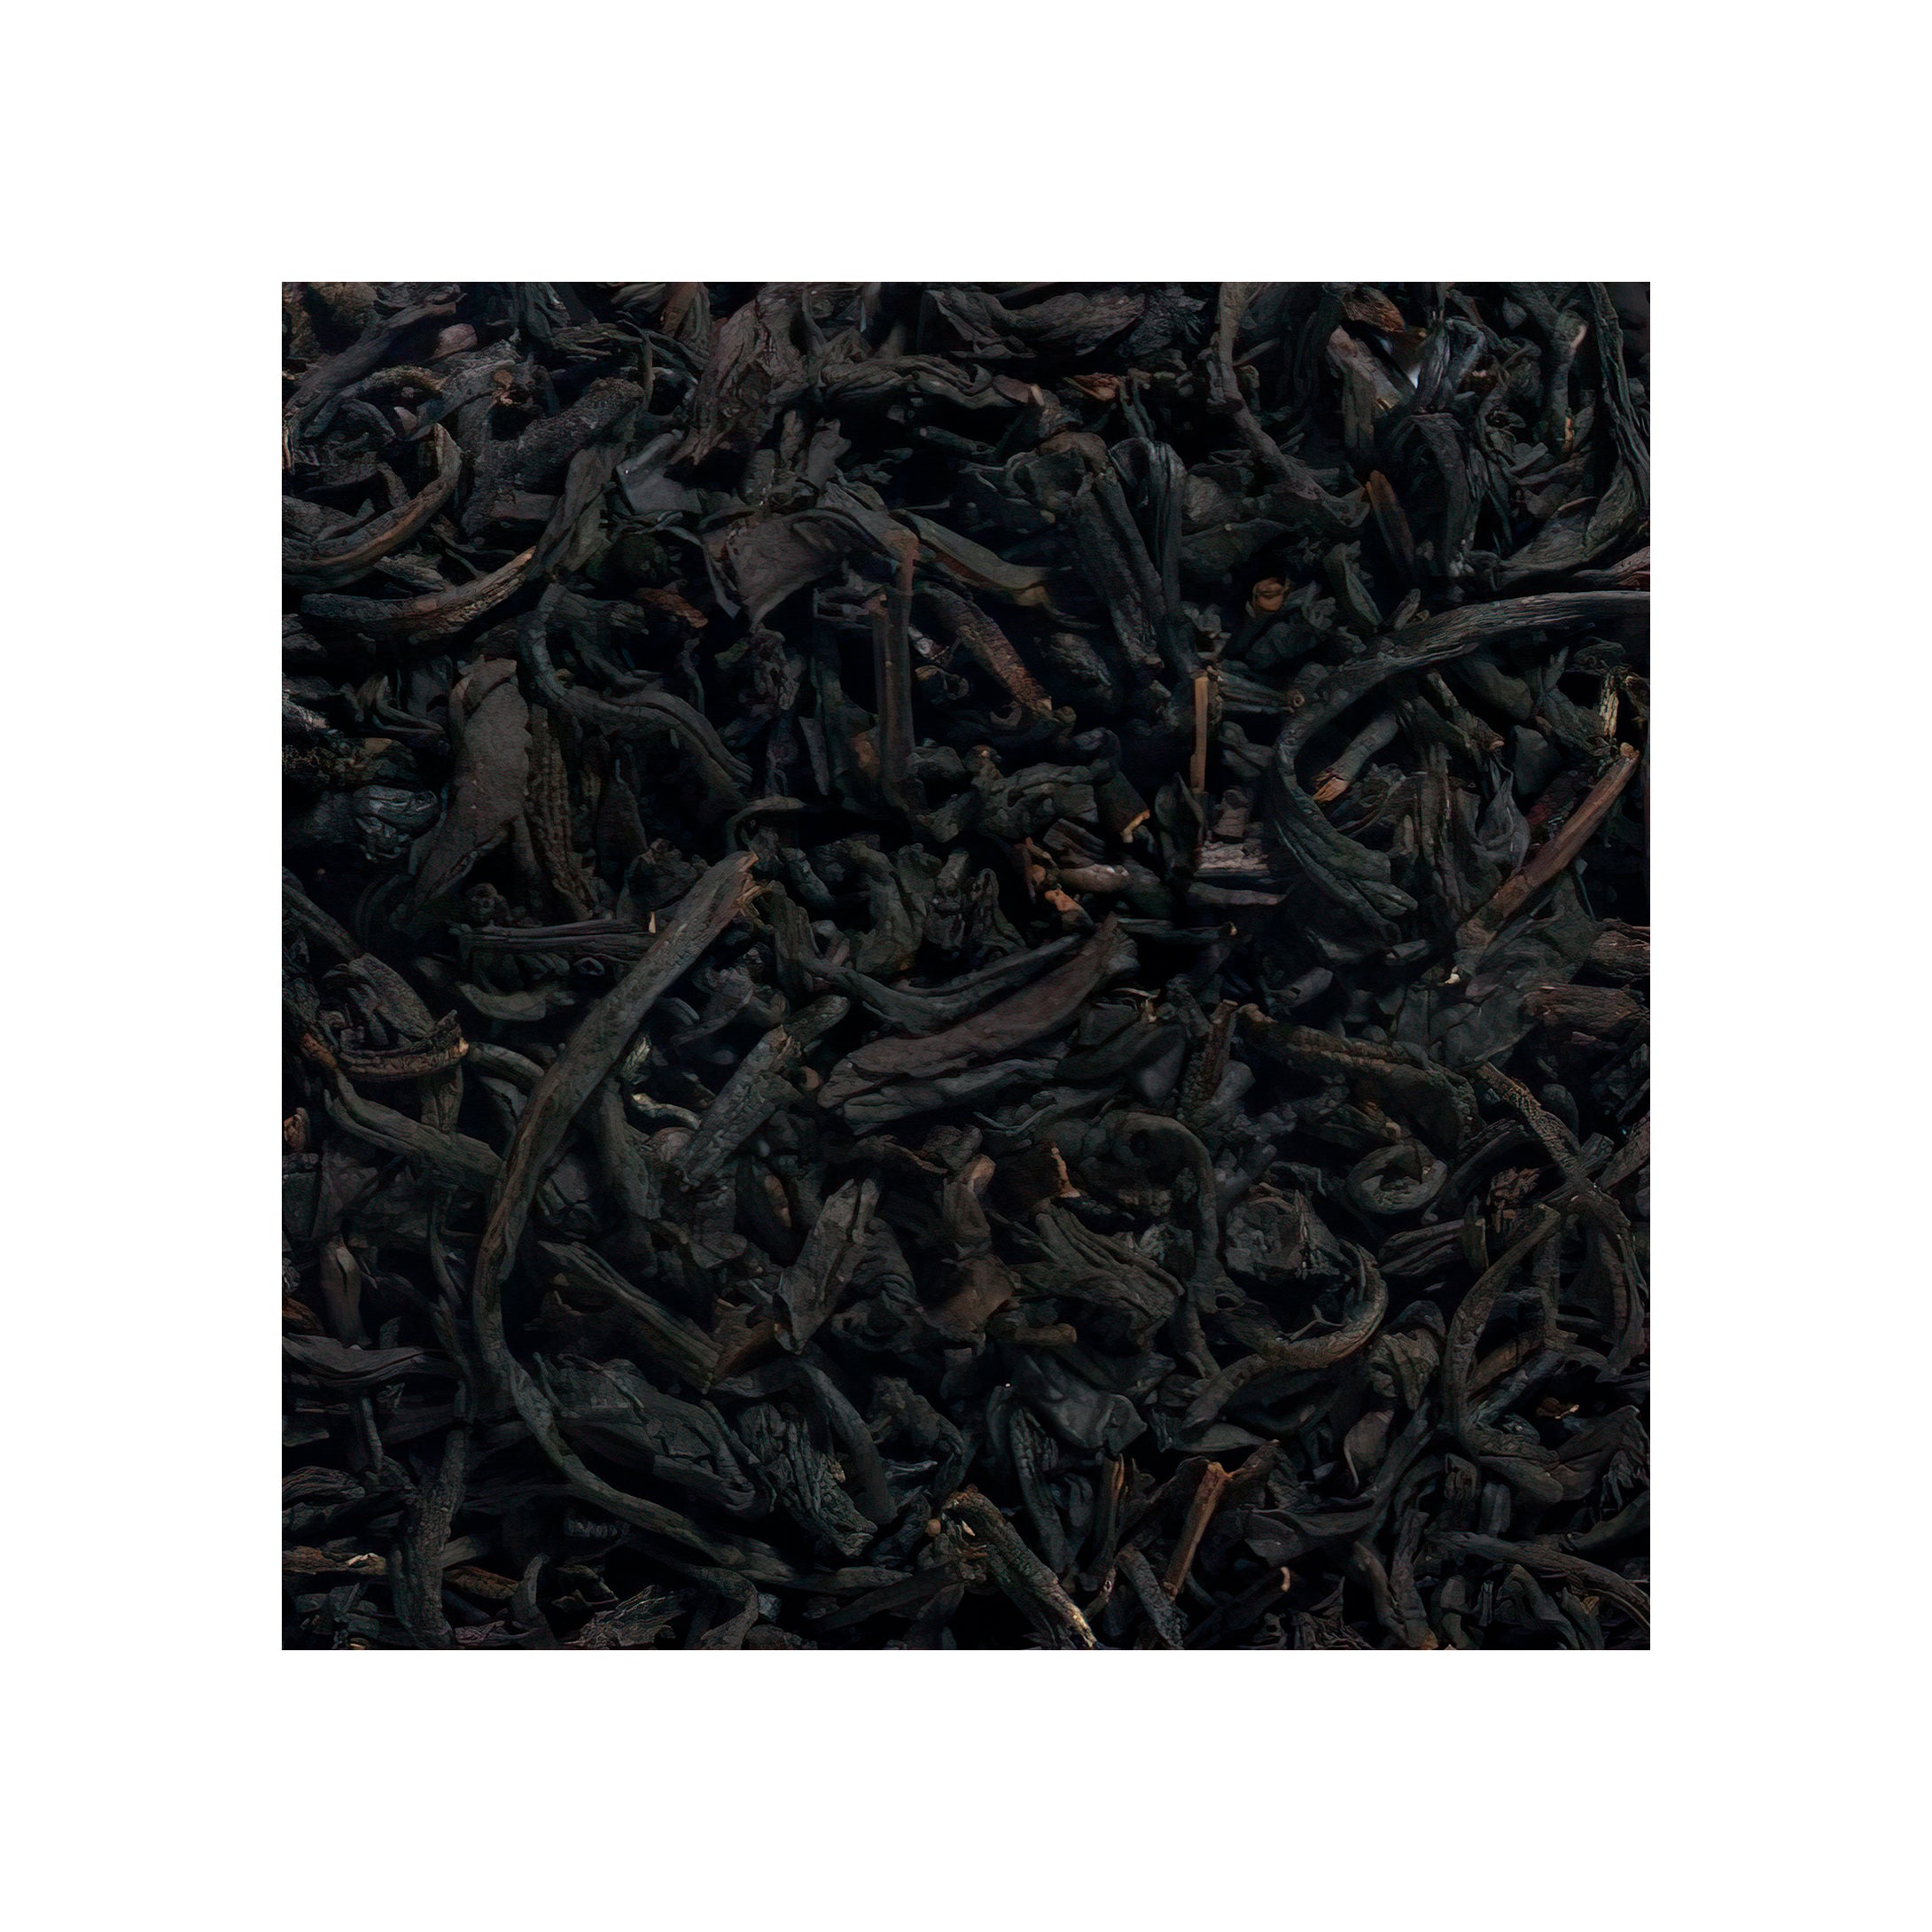 Blackcurrant Tea